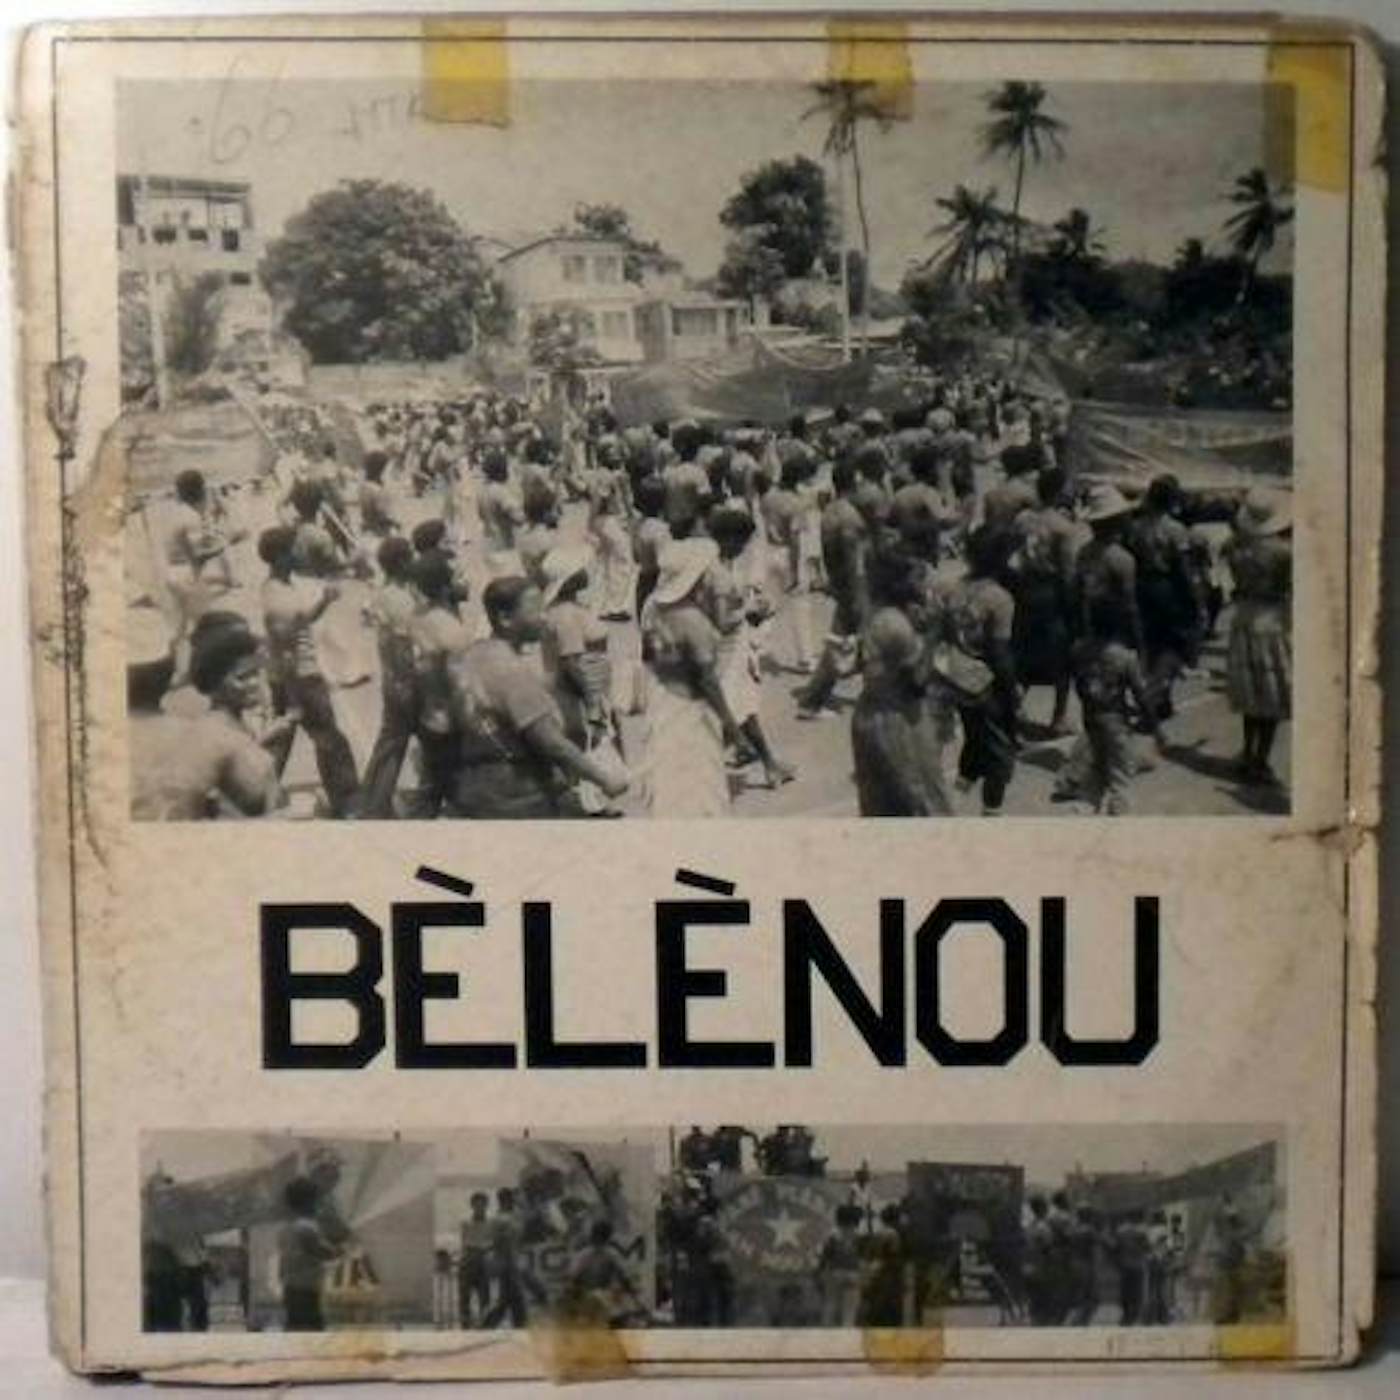 Belenou CHIMEN TA LA Vinyl Record